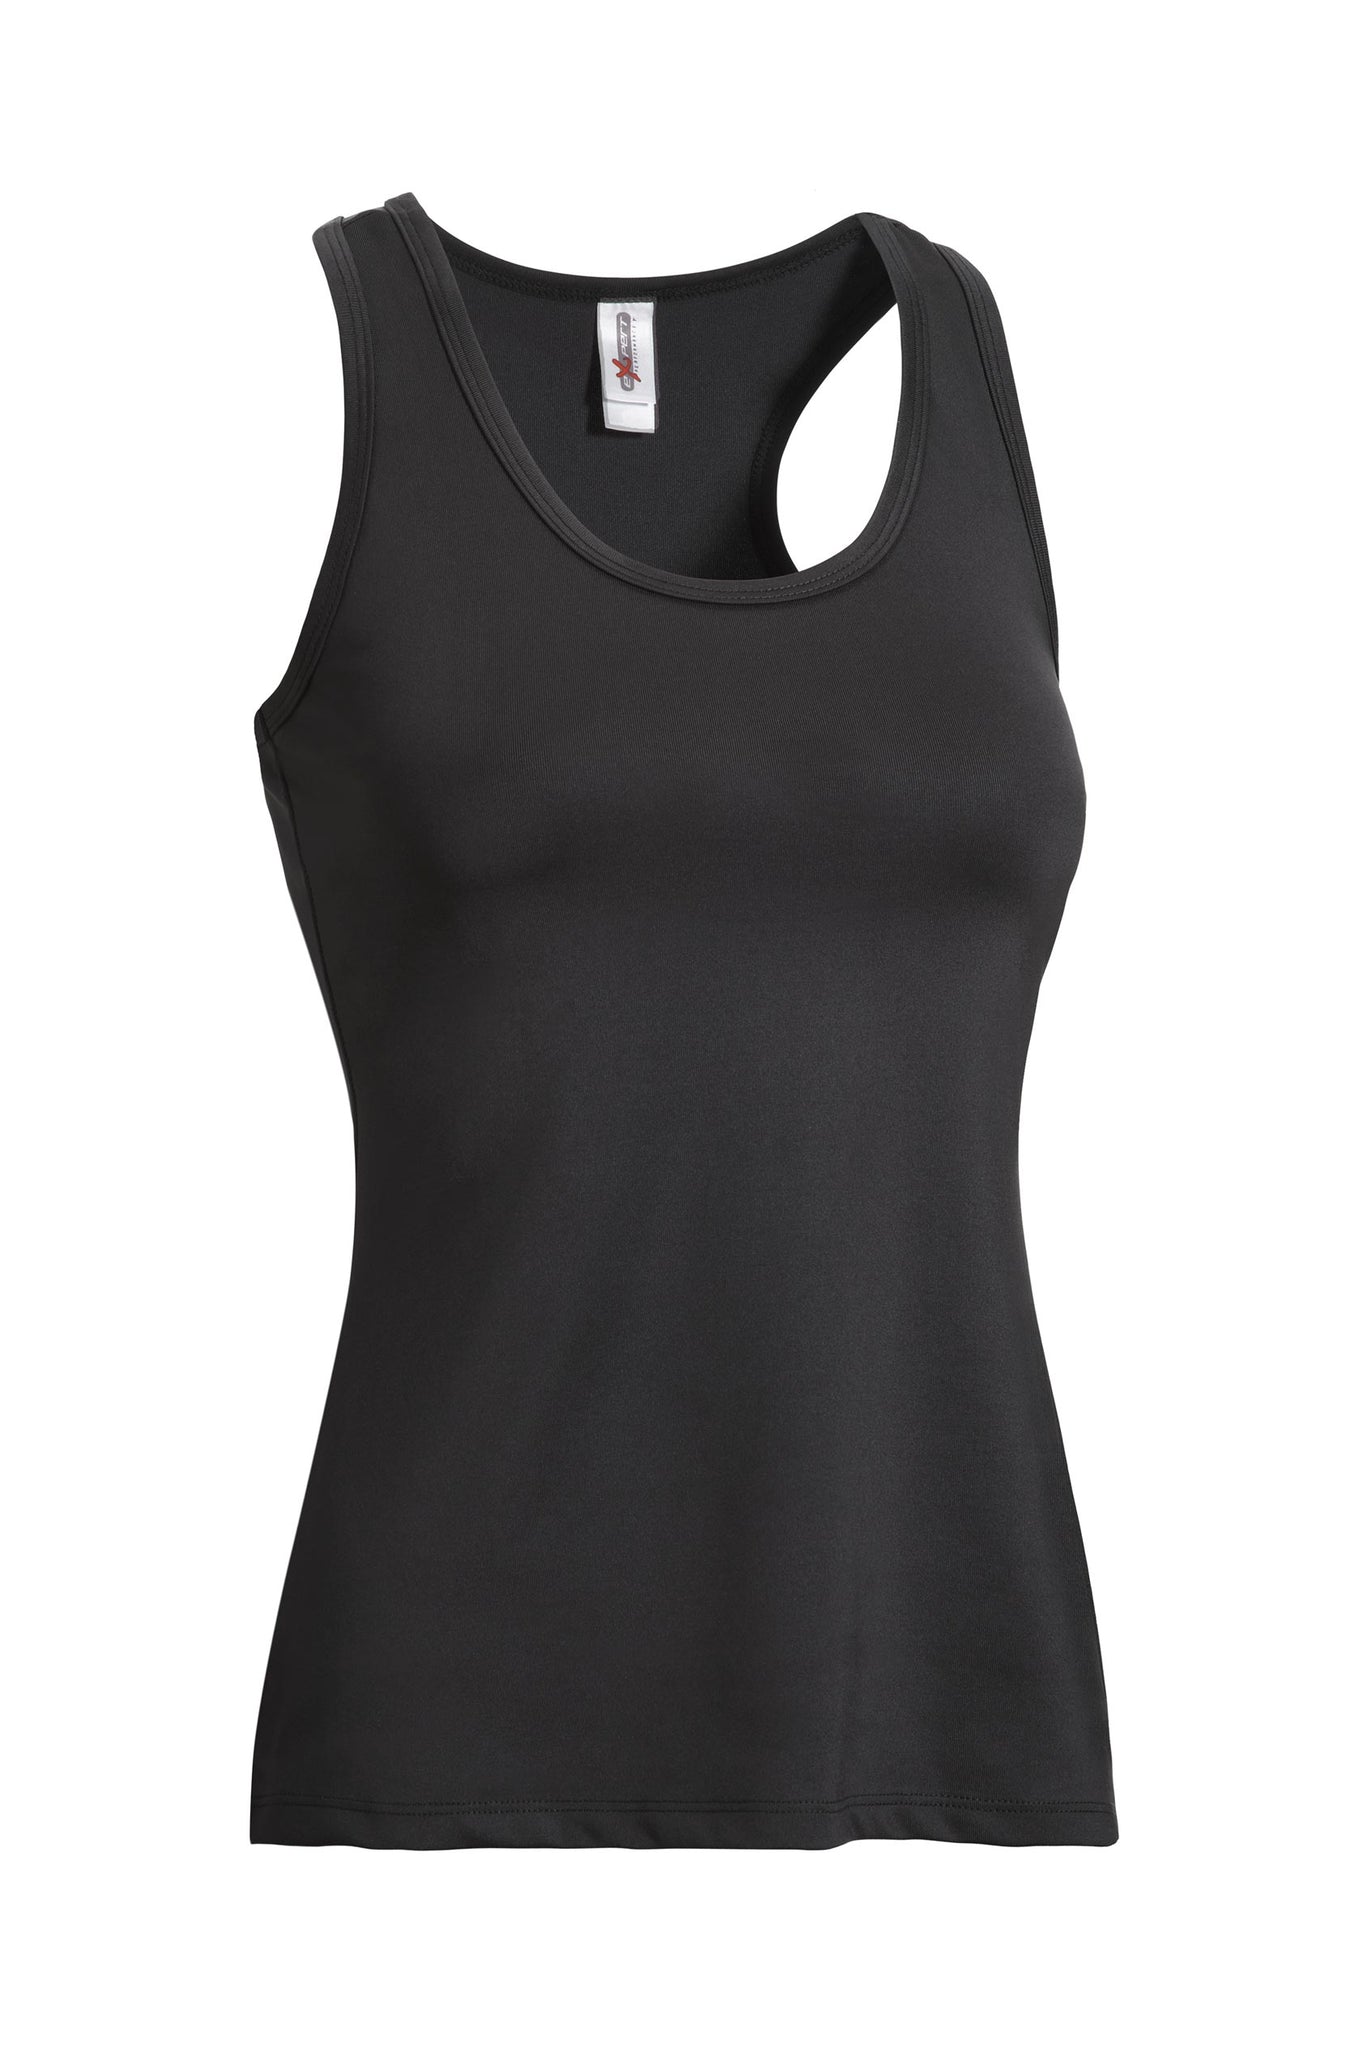 Expert Brand Wholesale Made in USA women's gym racerback tank in black#black